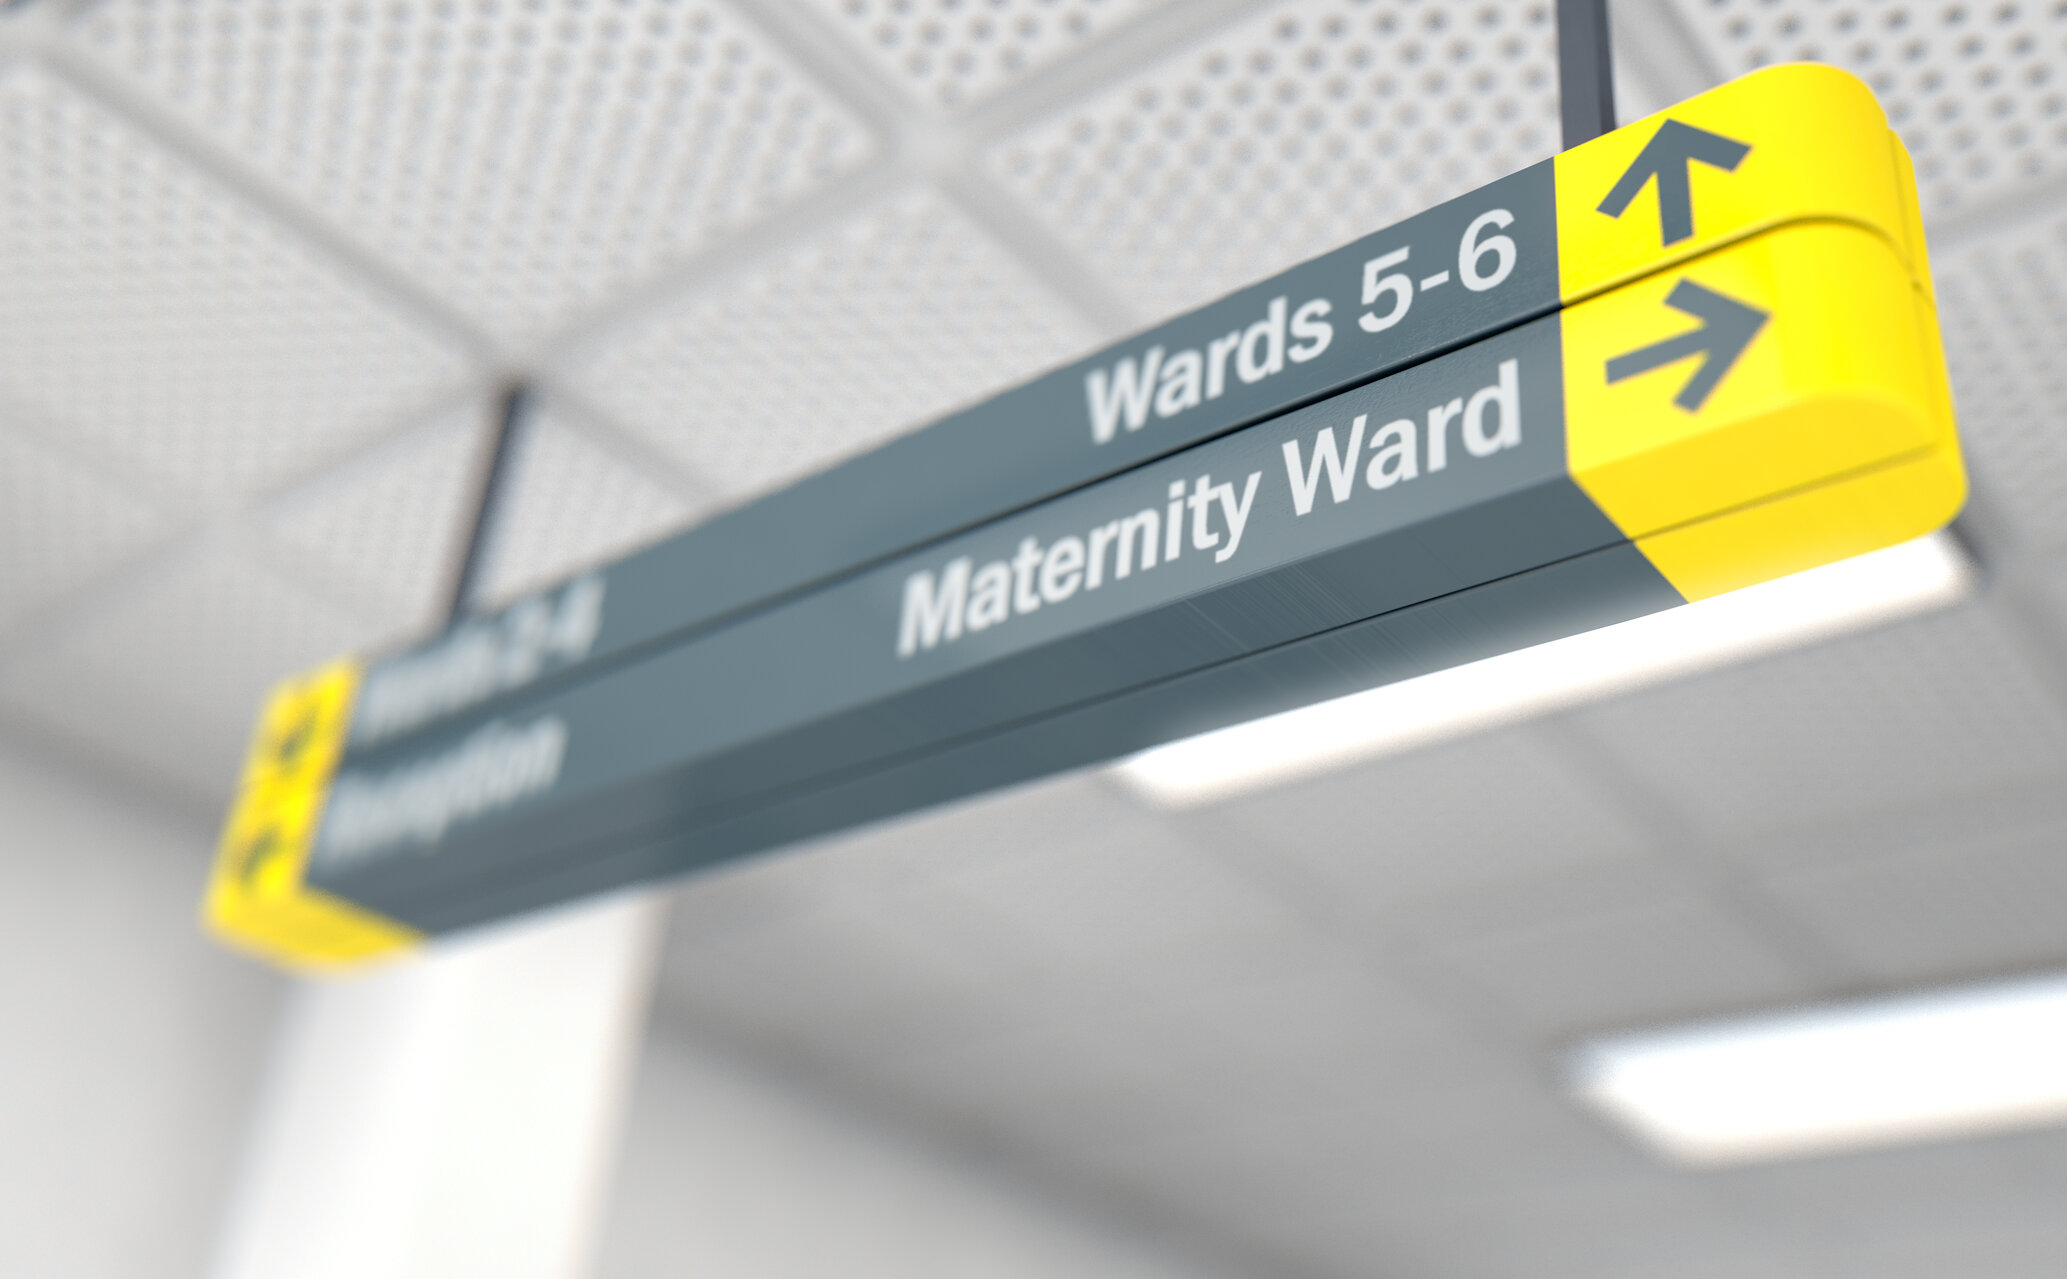 Maternity Ward sign hospital medical.jpeg